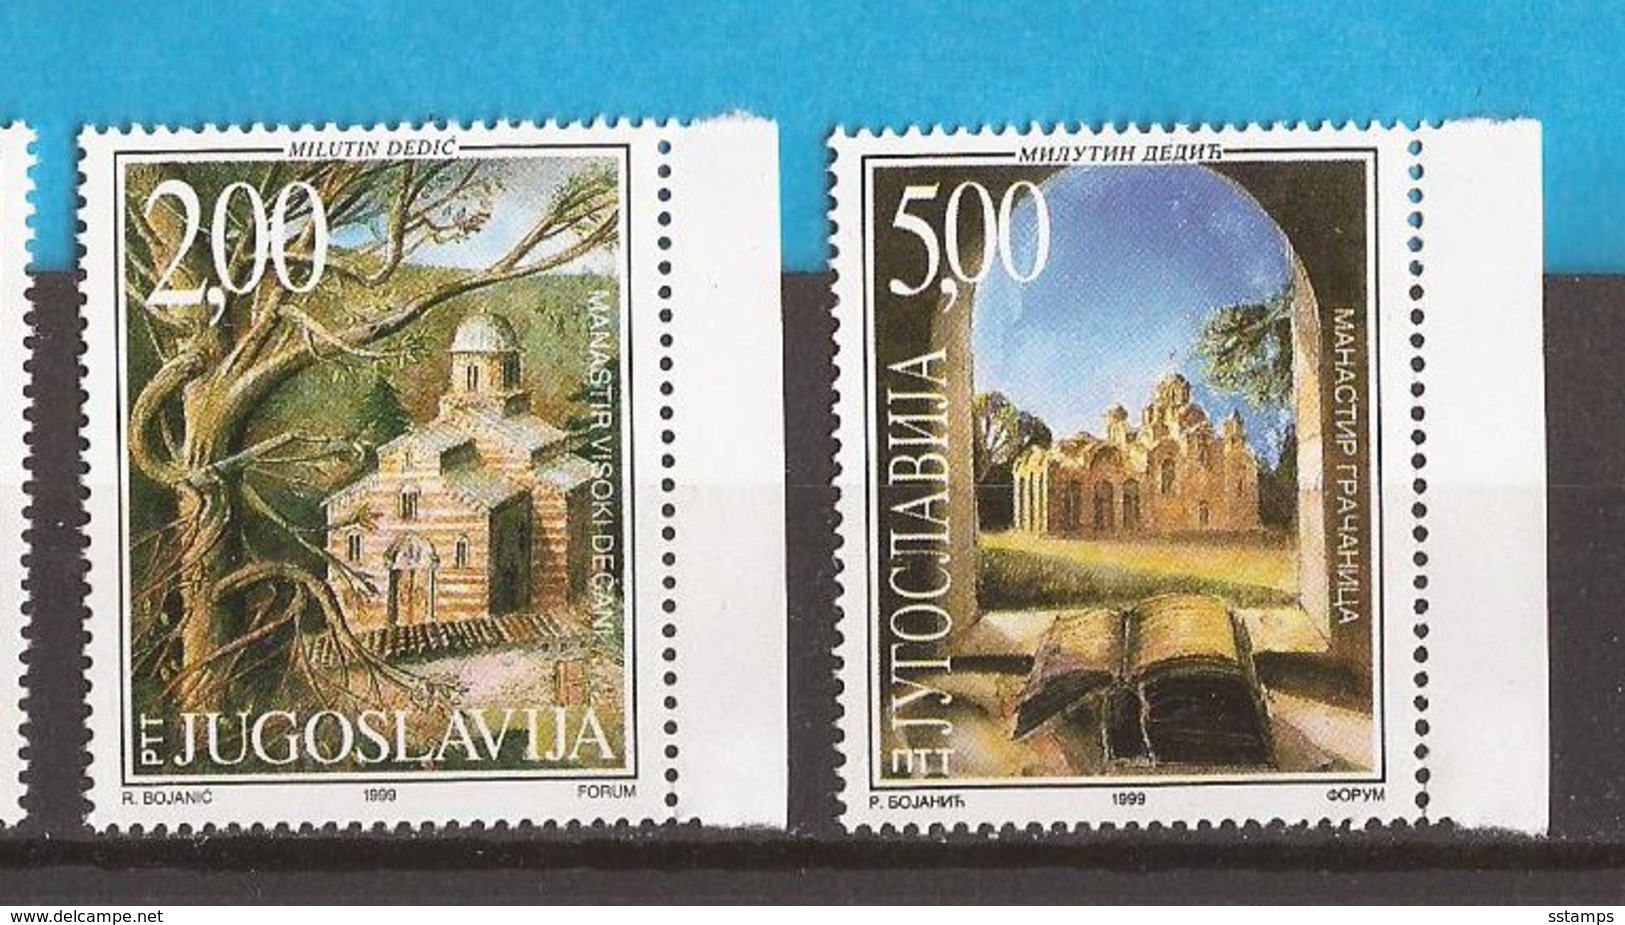 1999  2898-9   GRACANICA - DECANI KLOSTER    IN SERBIEN JUGOSLAVIJA JUGOSLAWIEN  MNH - Serbia